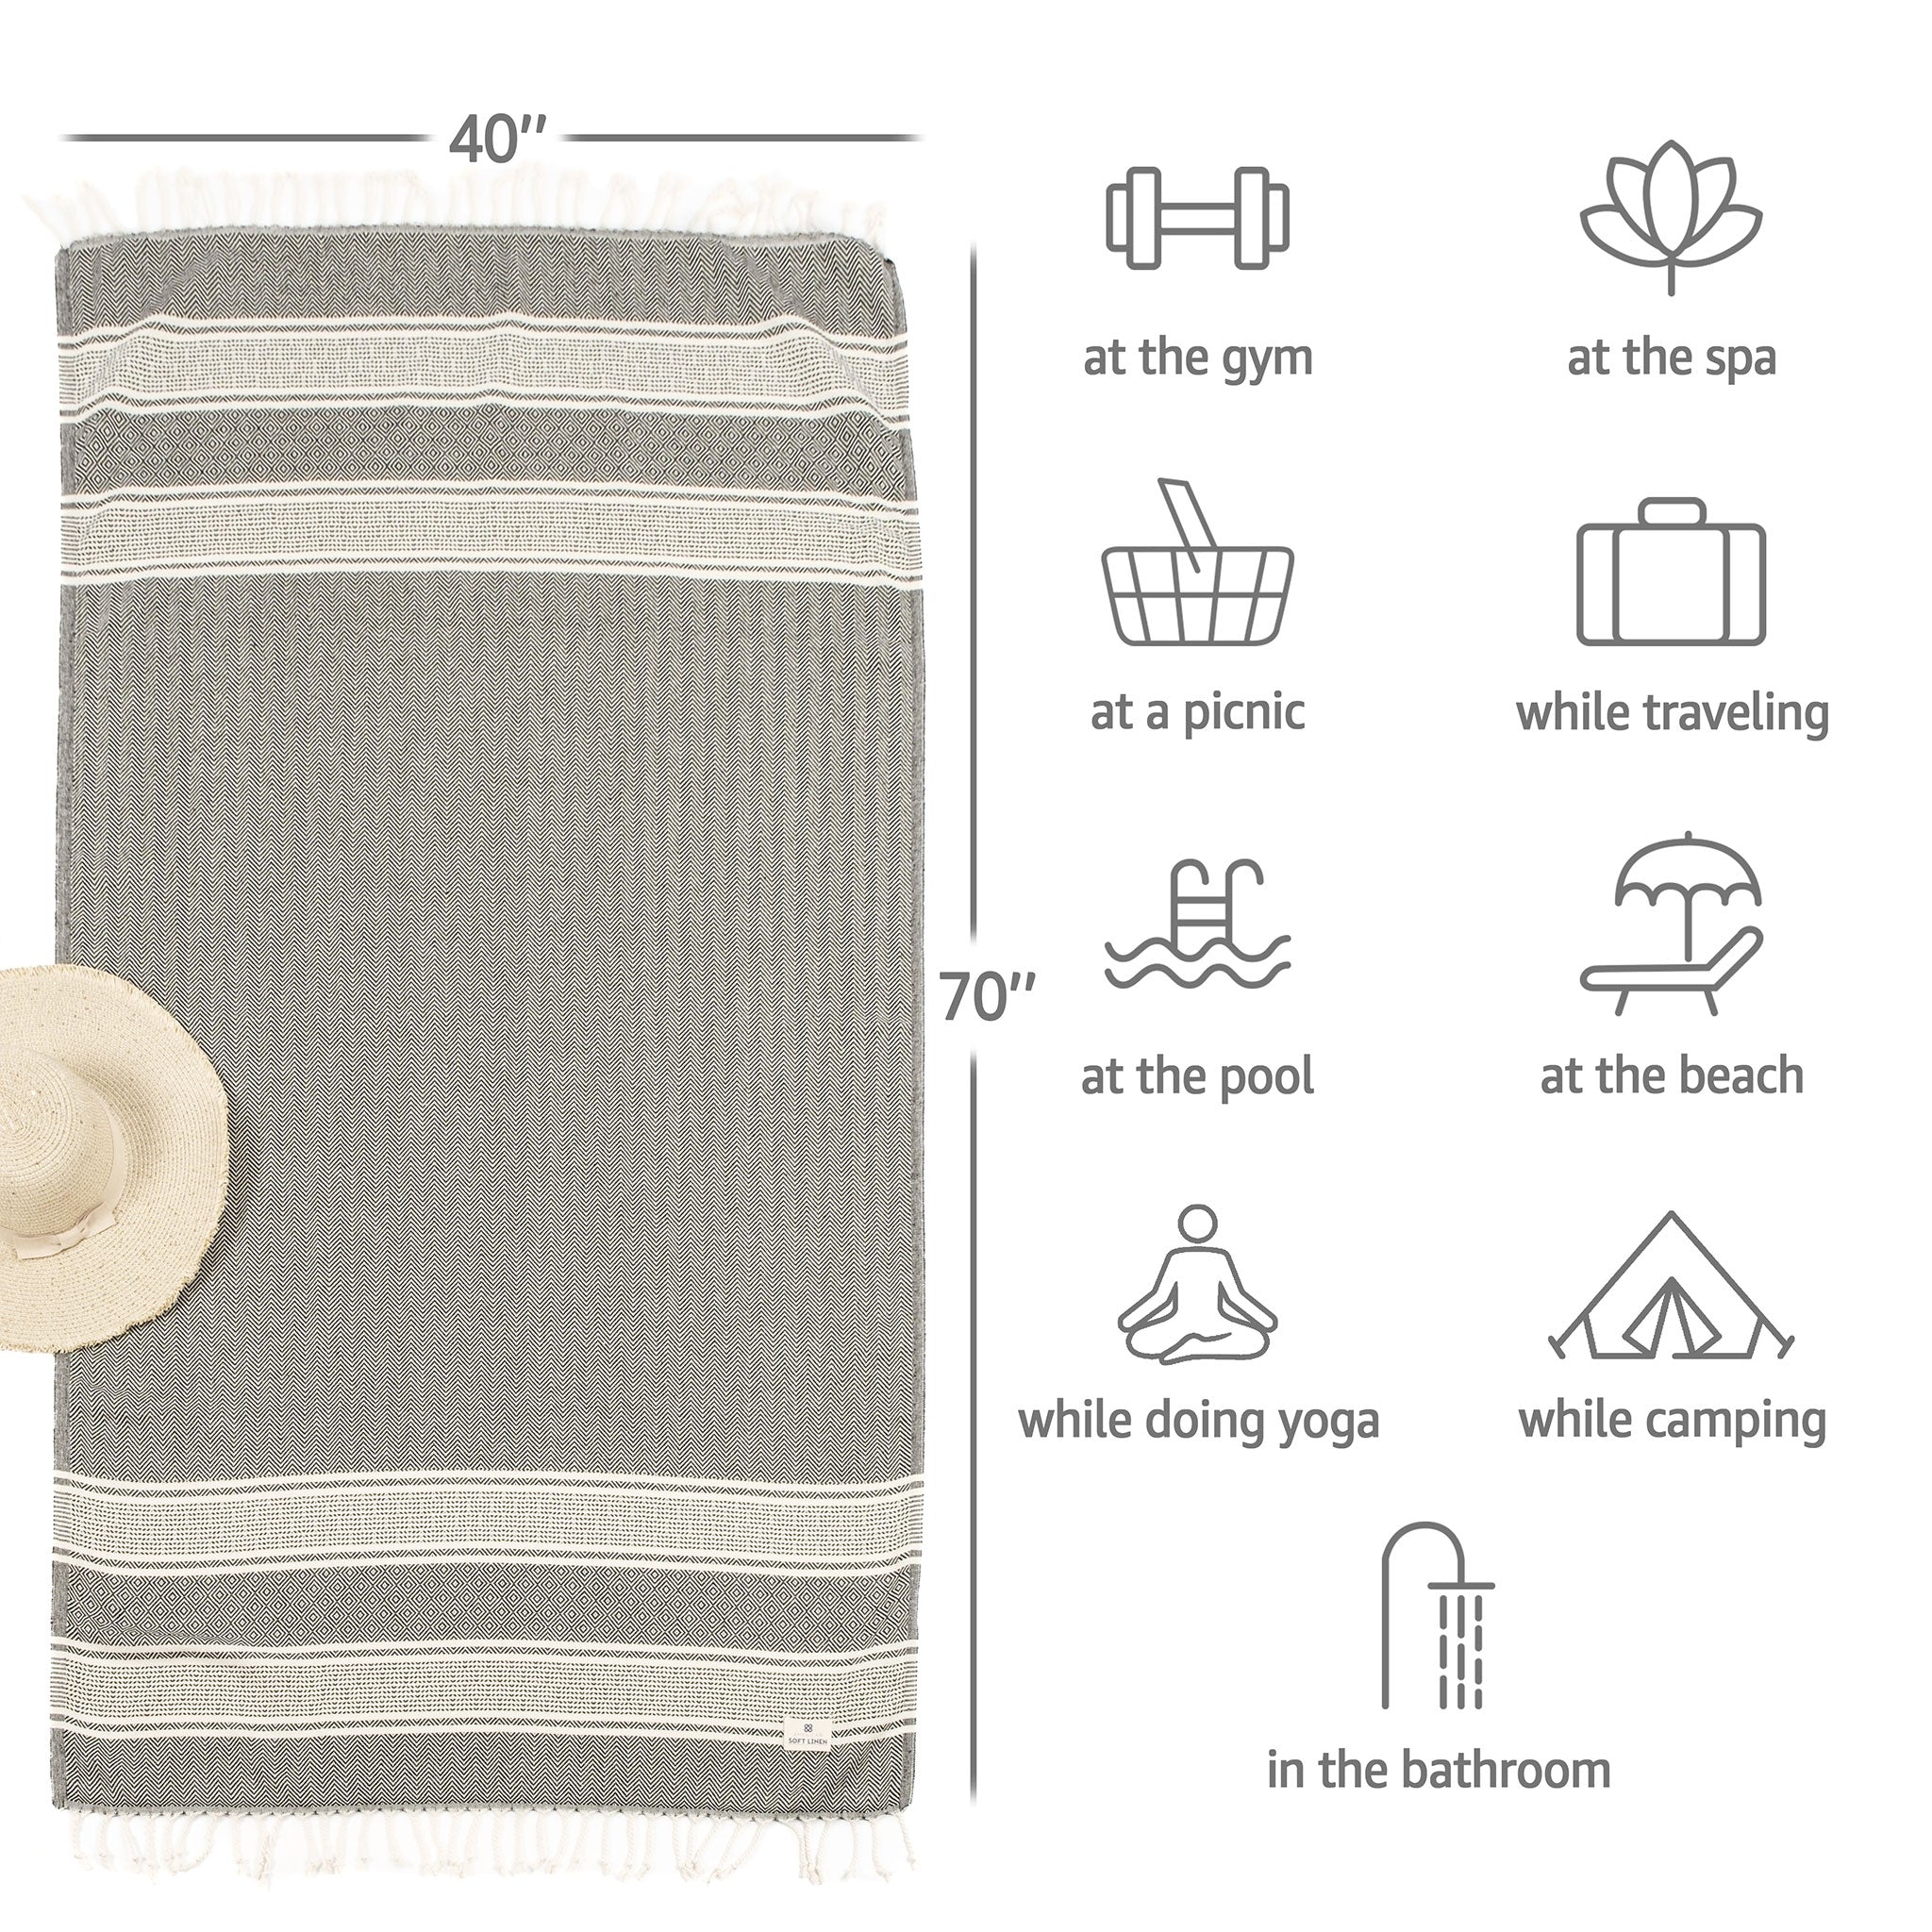 American Soft Linen - 100% Cotton Turkish Peshtemal Towels 40x70 Inches - Black-Striped - 4